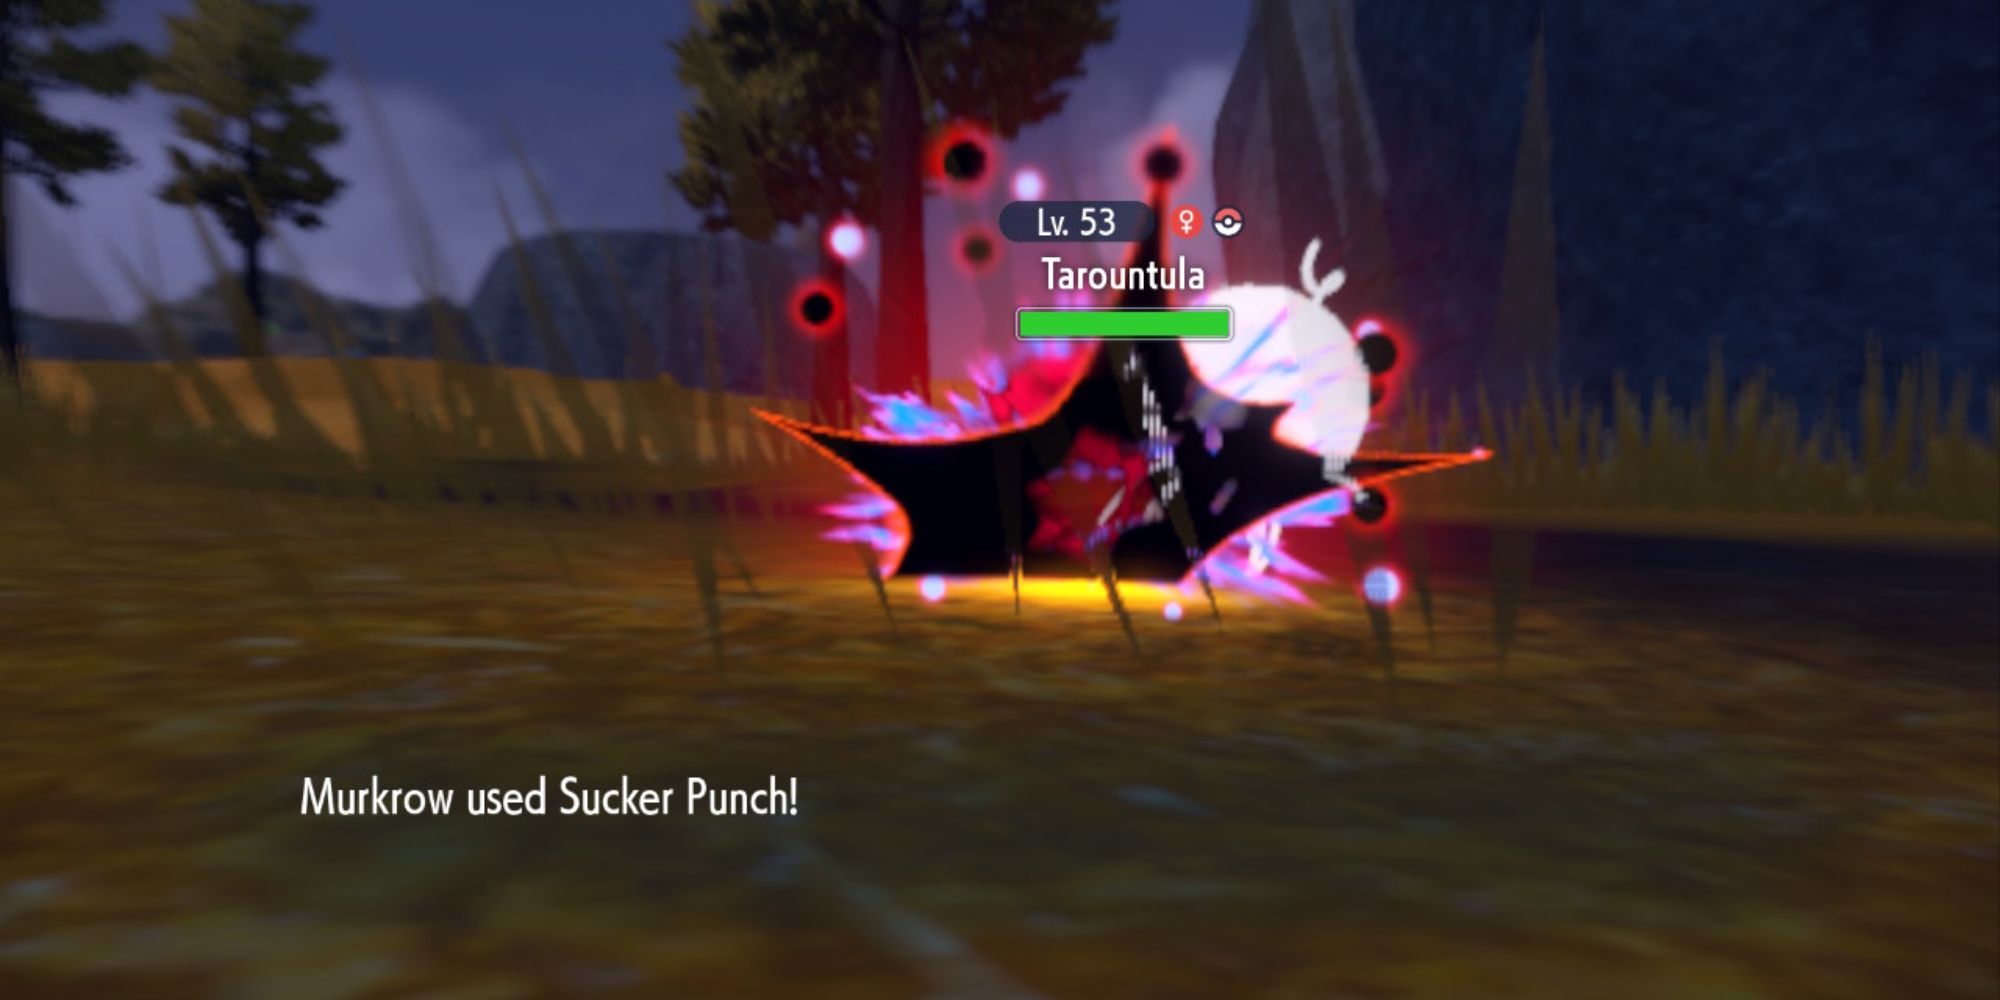 Tarountula gets hit with Sucker Punch